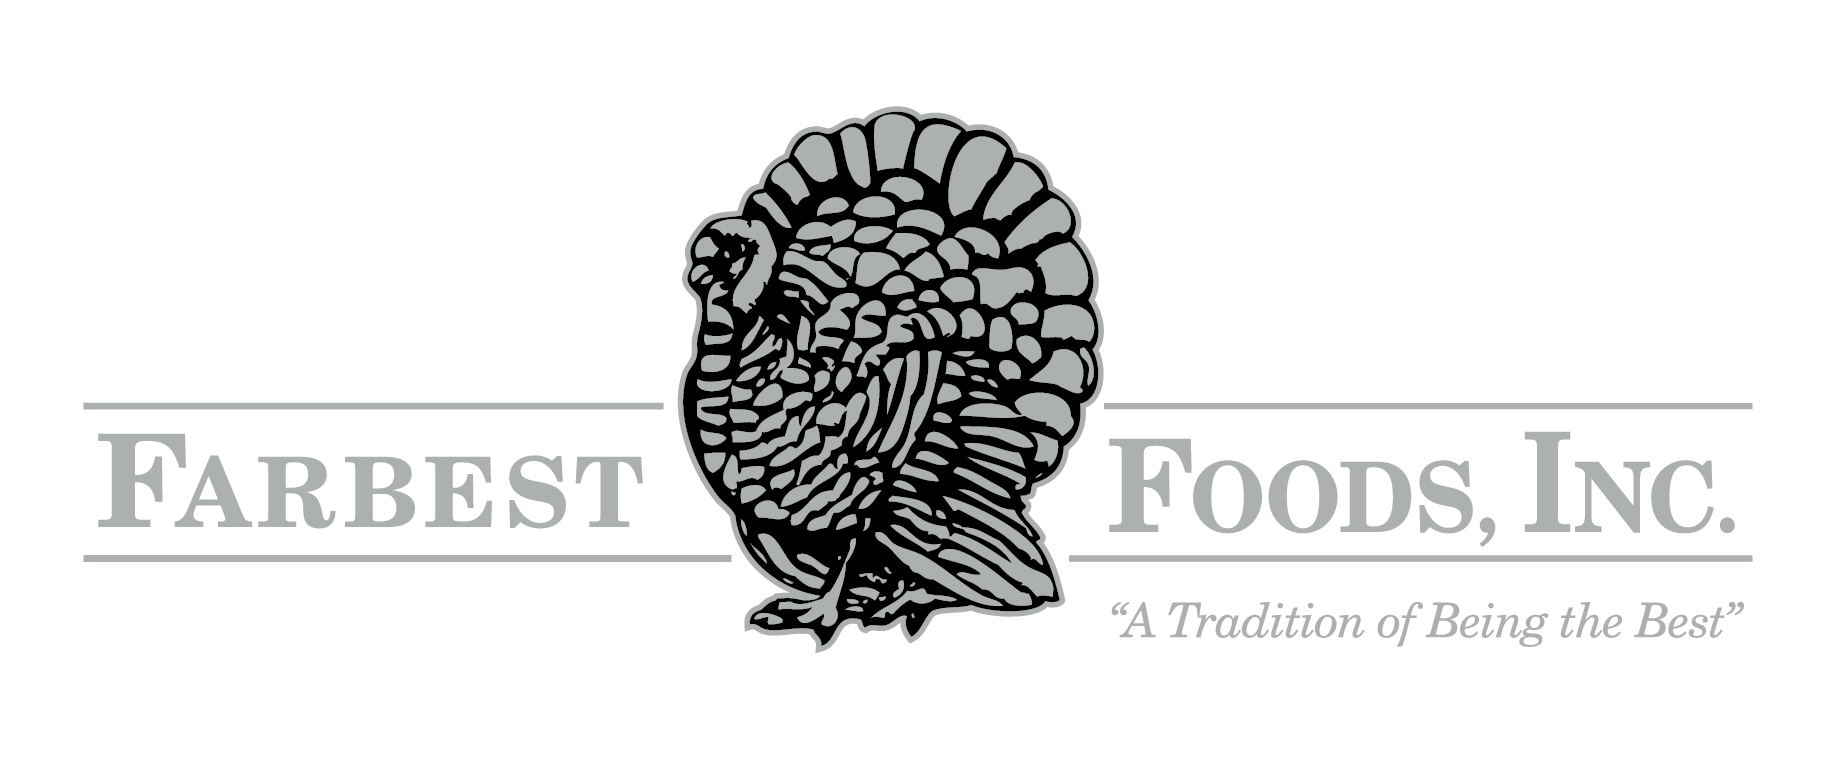 Farbest Foods Silver Logo jpg format